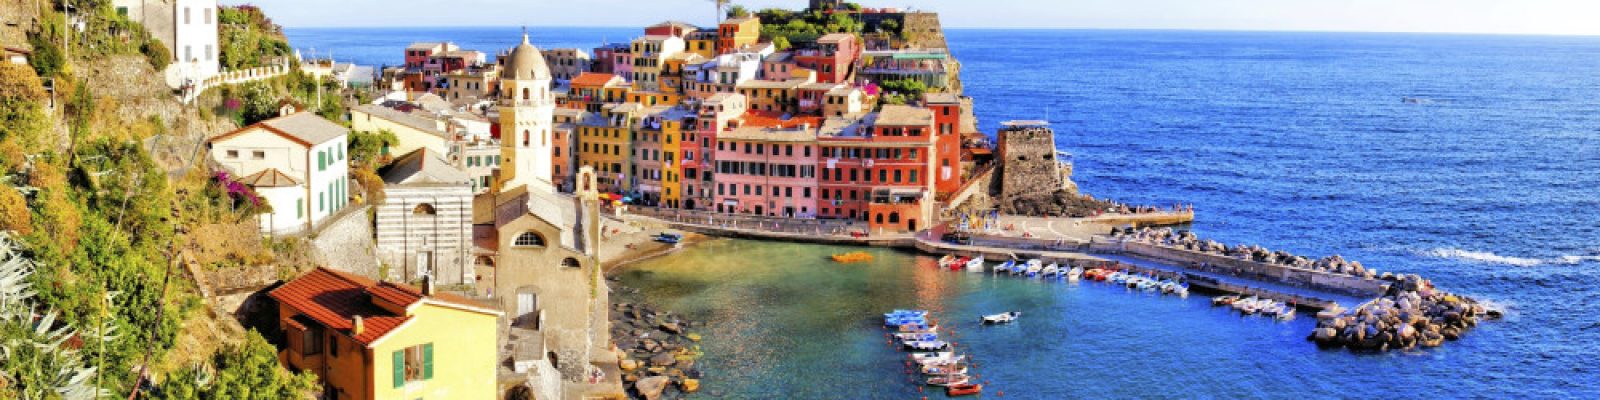 Italian coastal village panorama